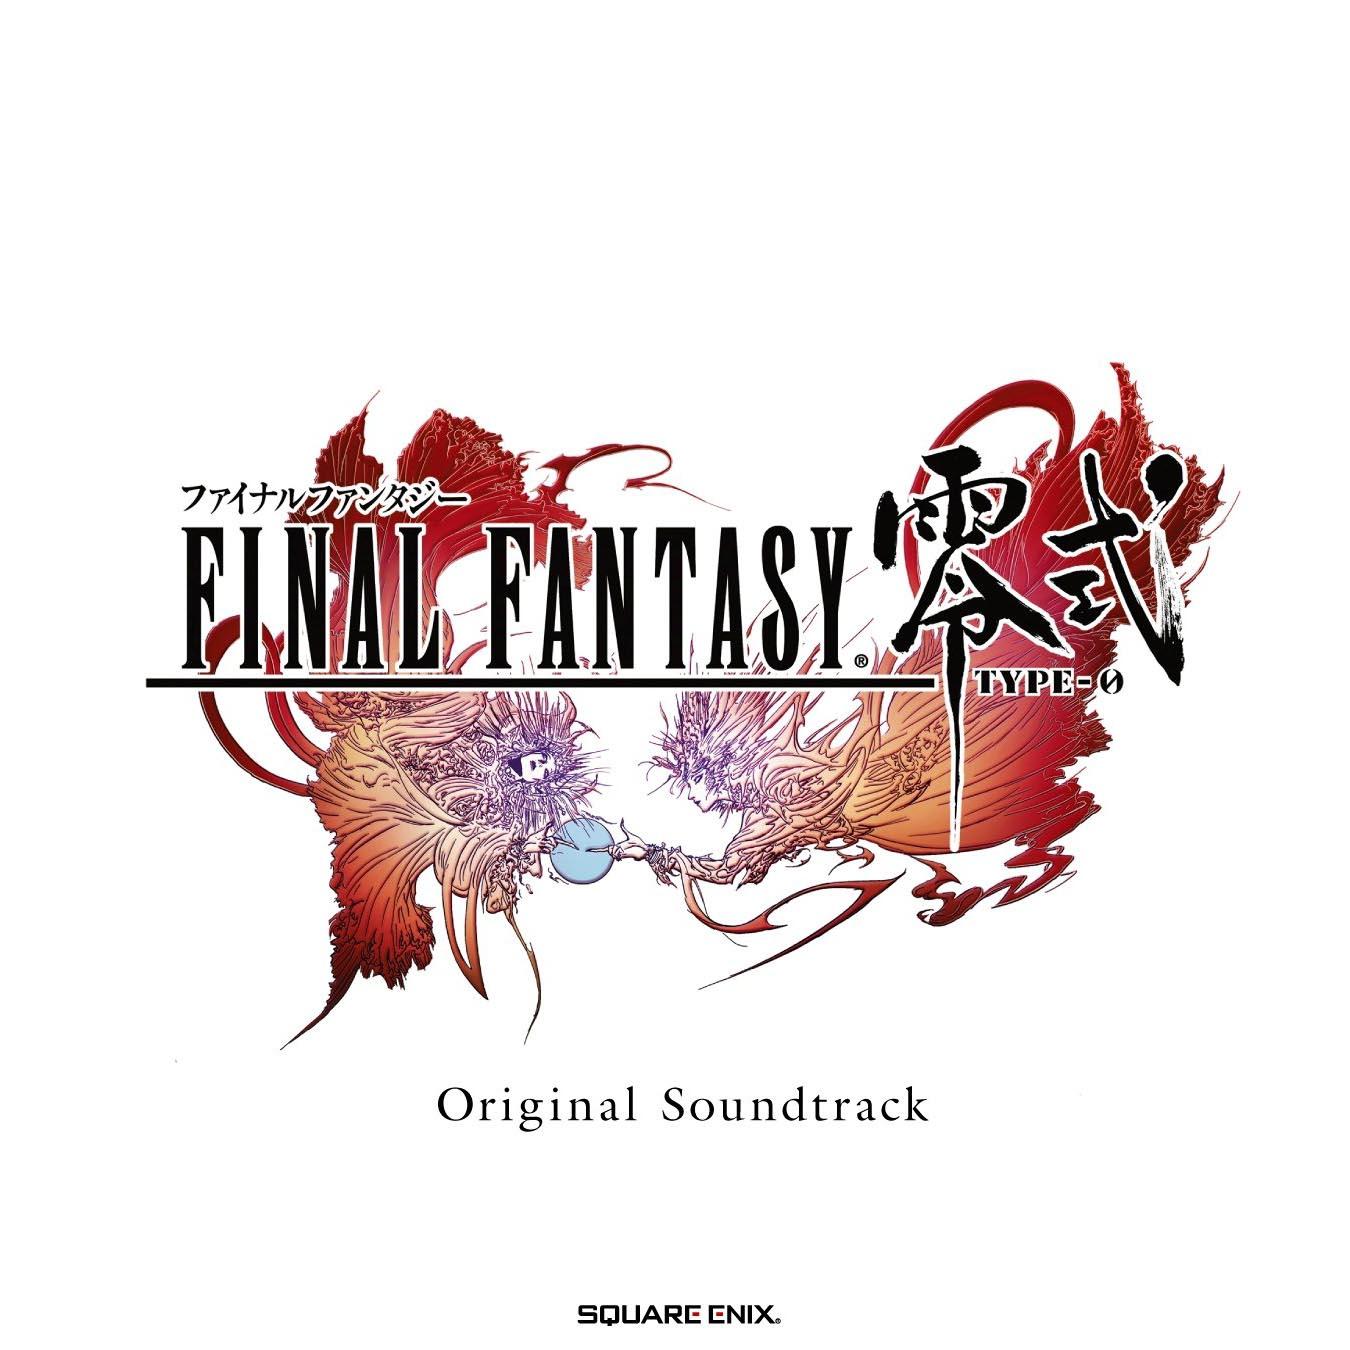 Final Fantasy Type-0 Original Soundtrack